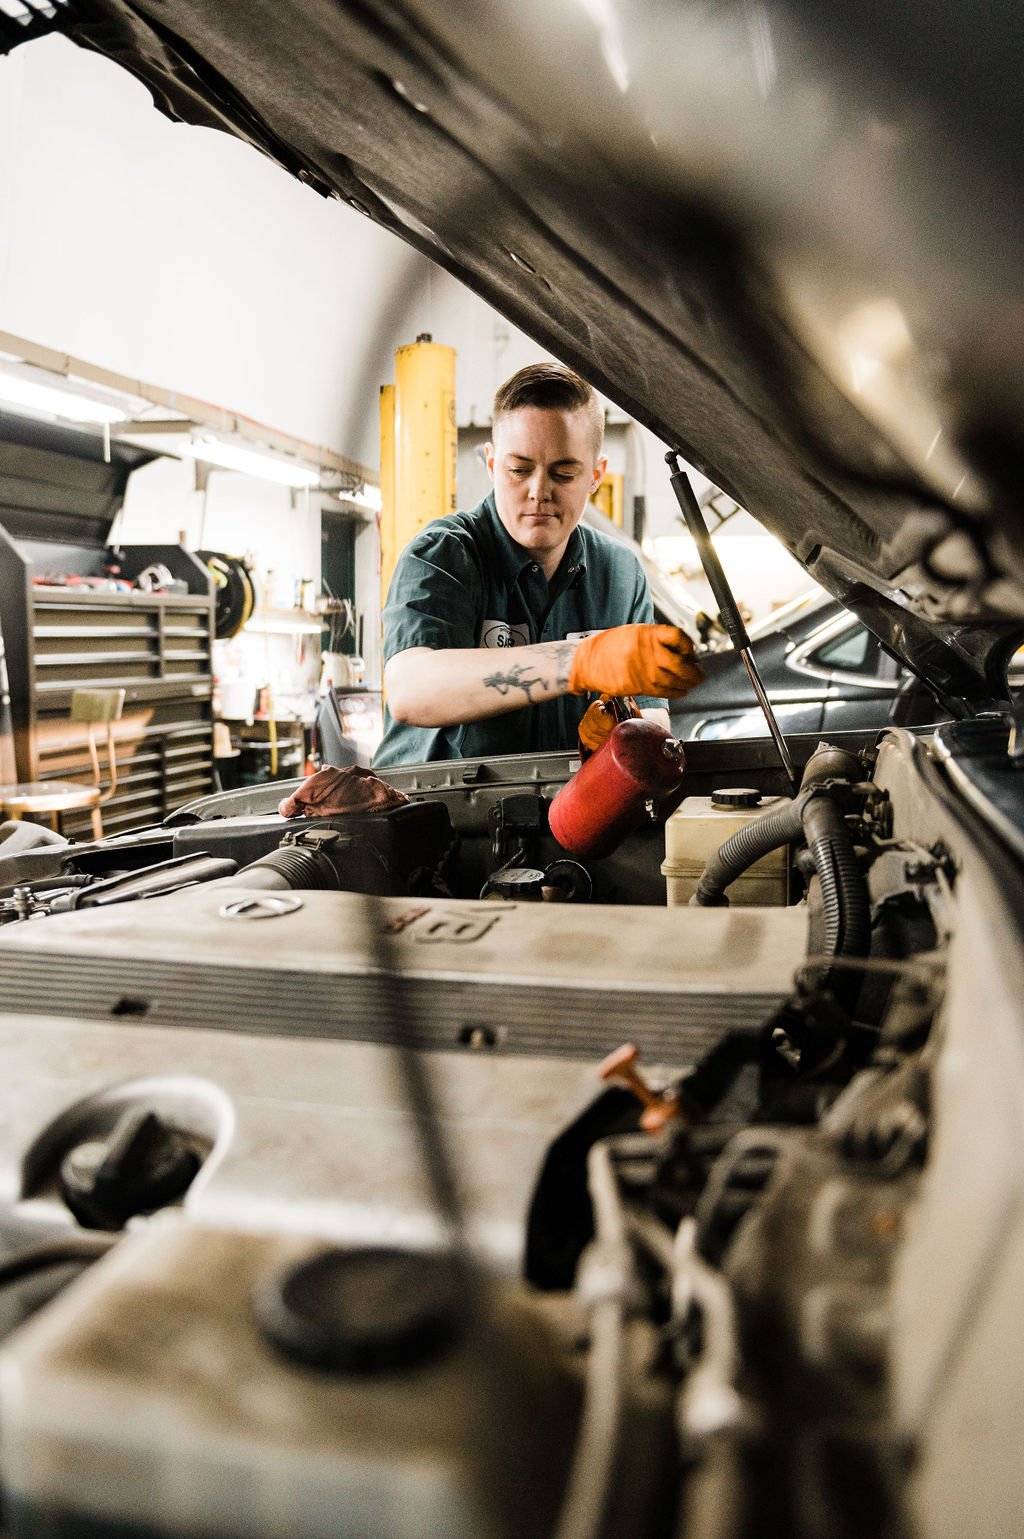 Portland branding photographer captures a mechanic fixing a car in an Auto Repair company’s garage.